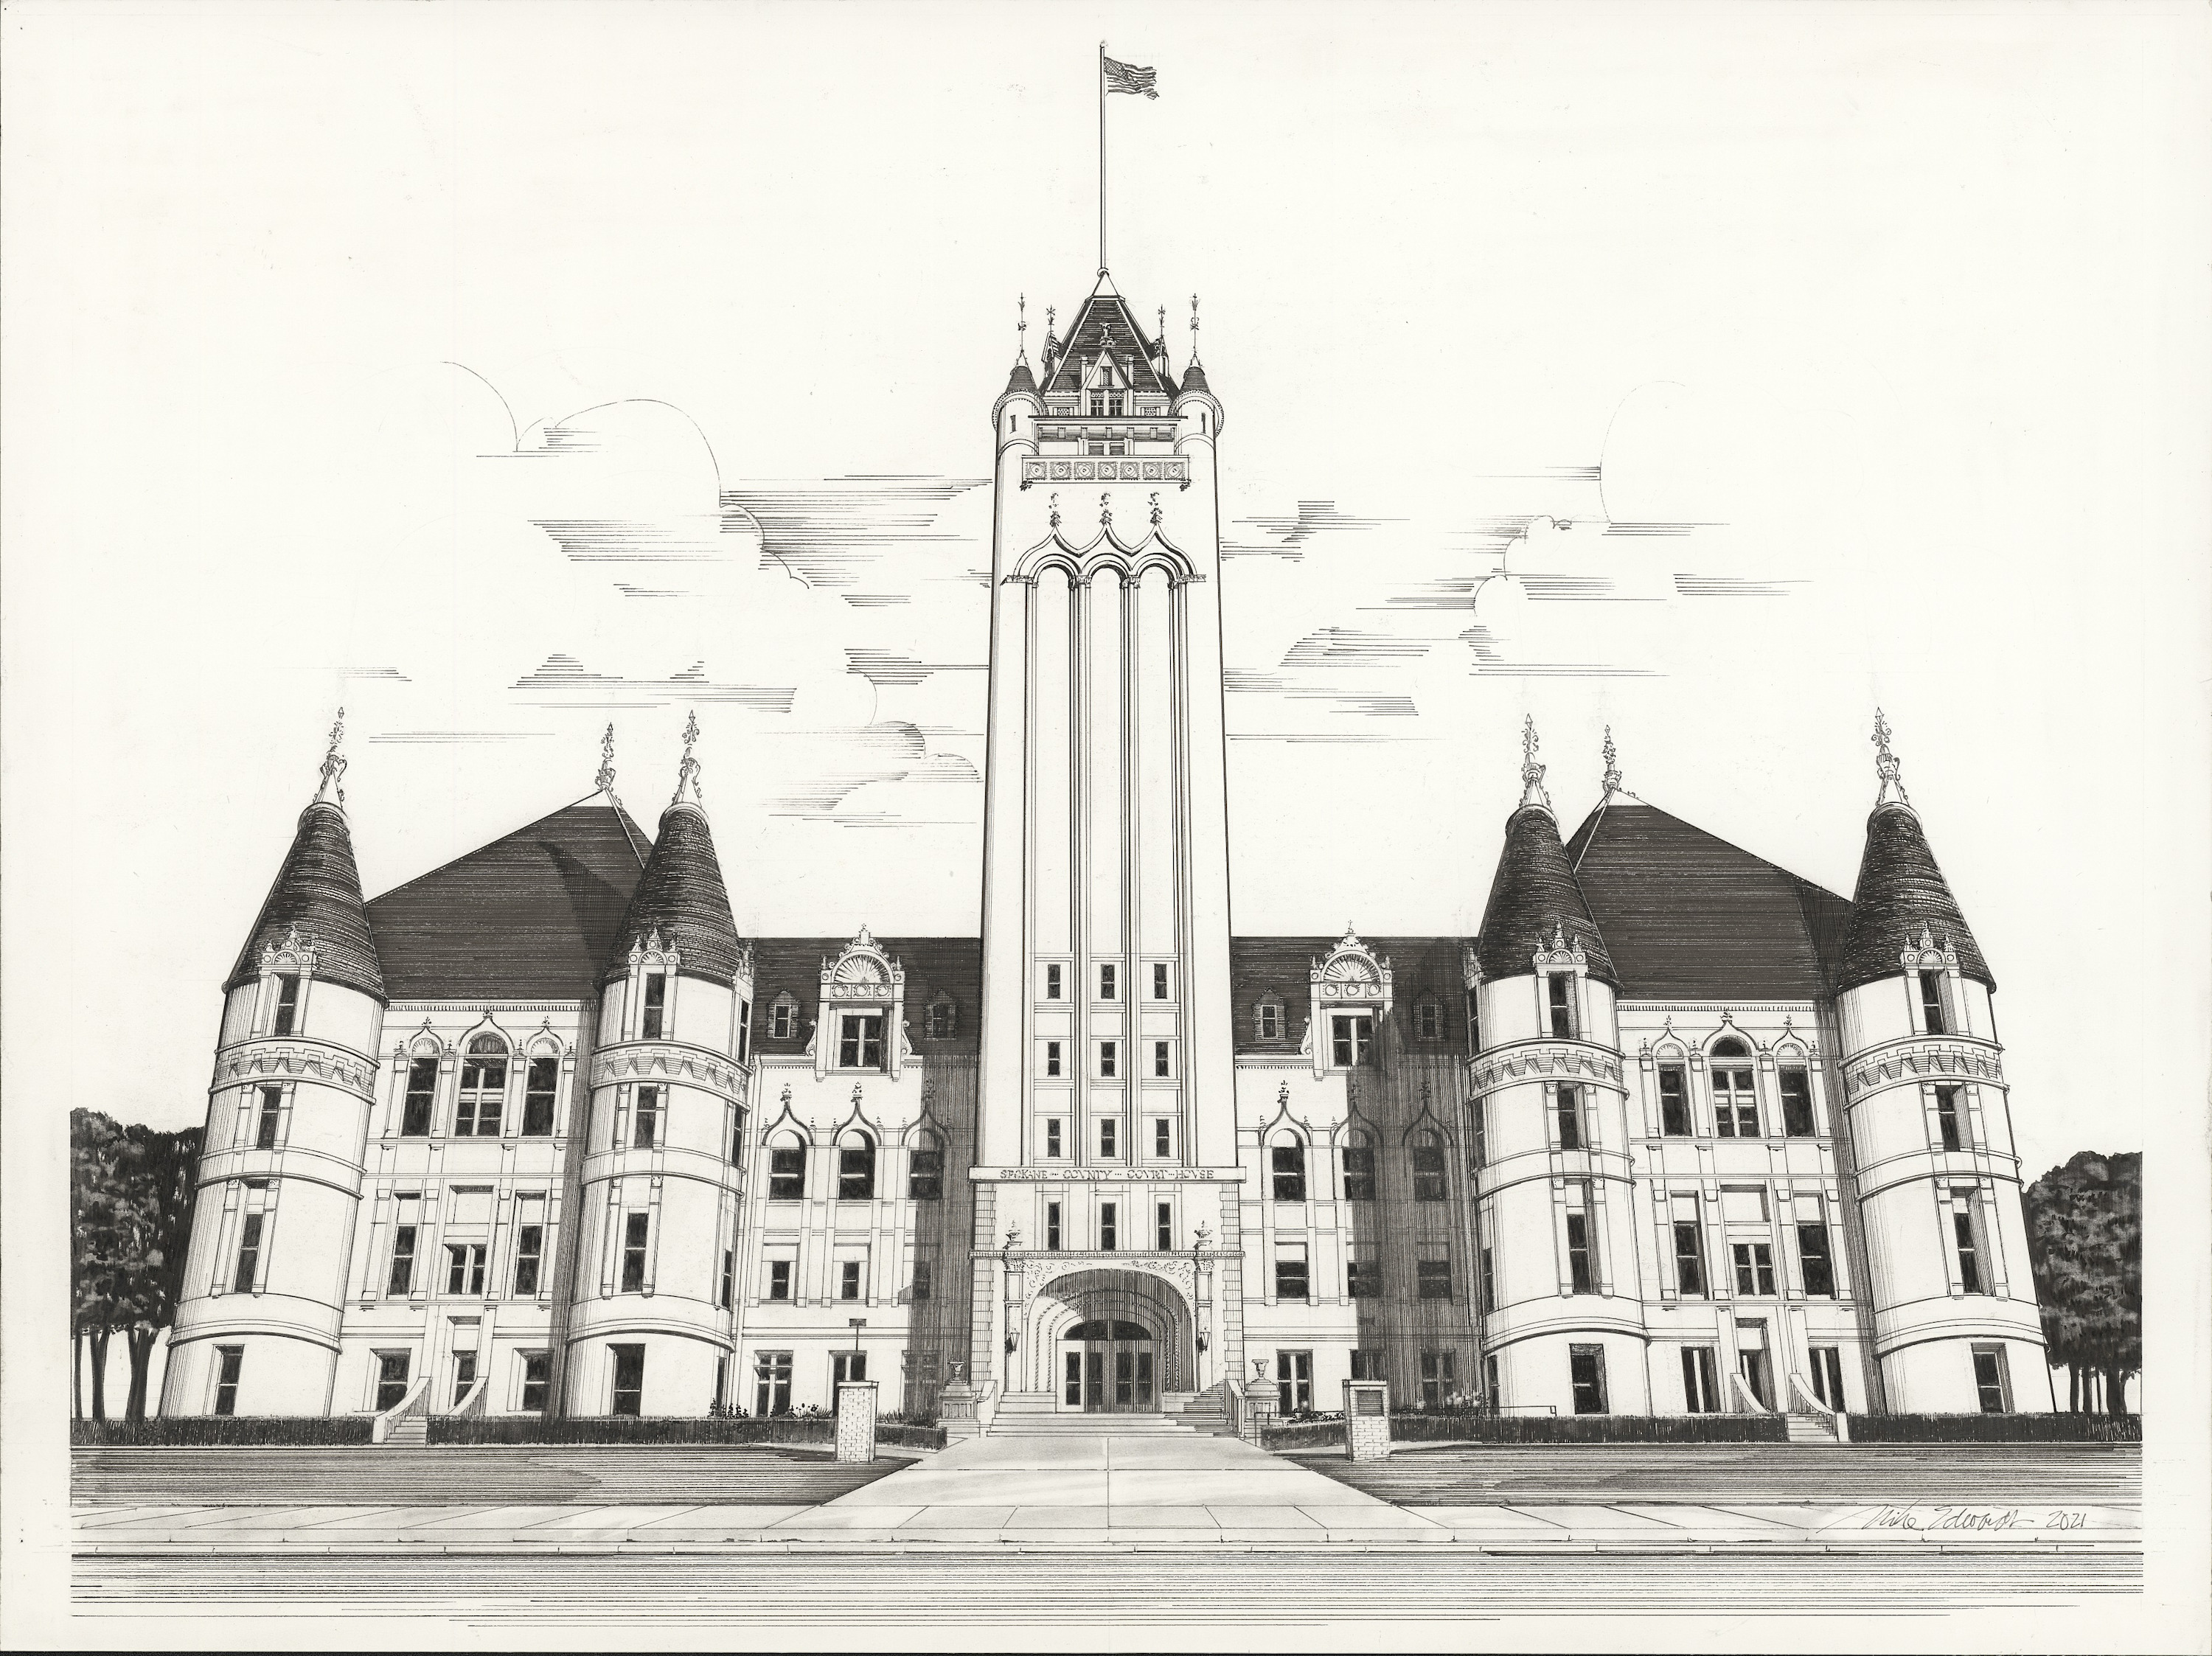 Low res scan of original spokane county courthouse kpmlld